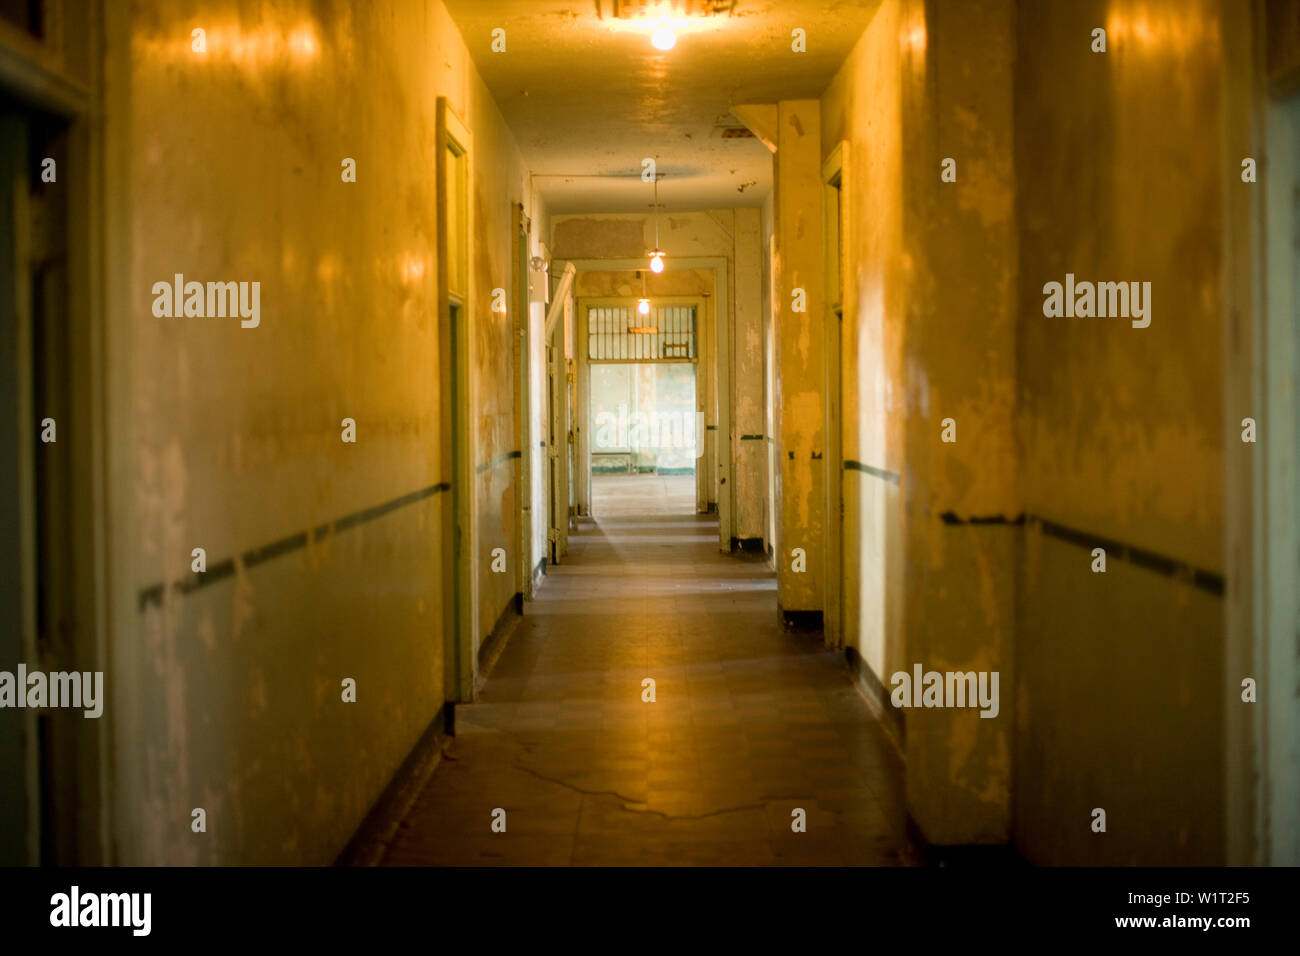 Hallway of a derelict building. Stock Photo